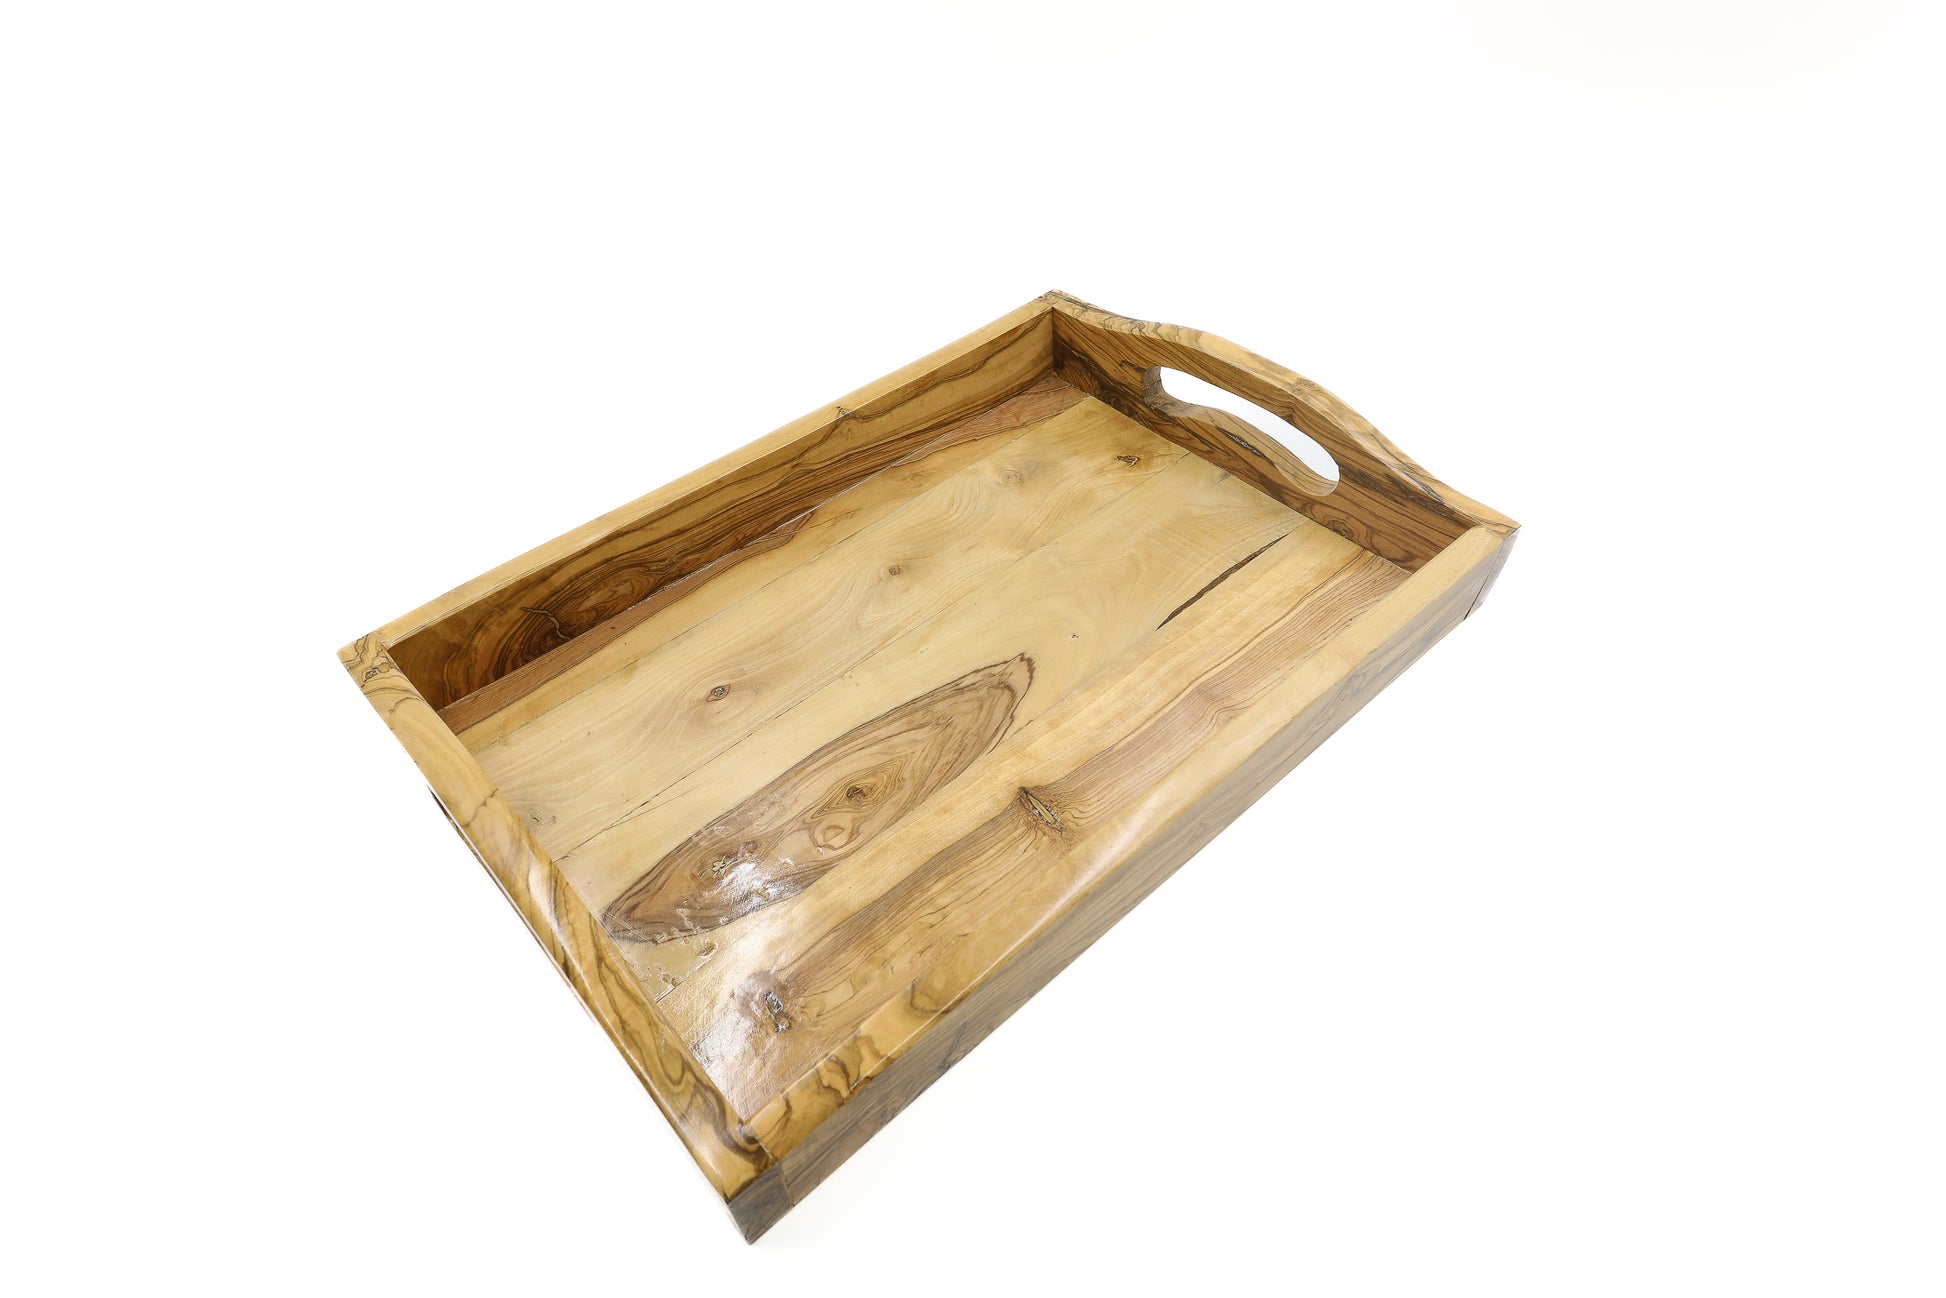 Elegant rectangular olive wood serving tray with convenient handles